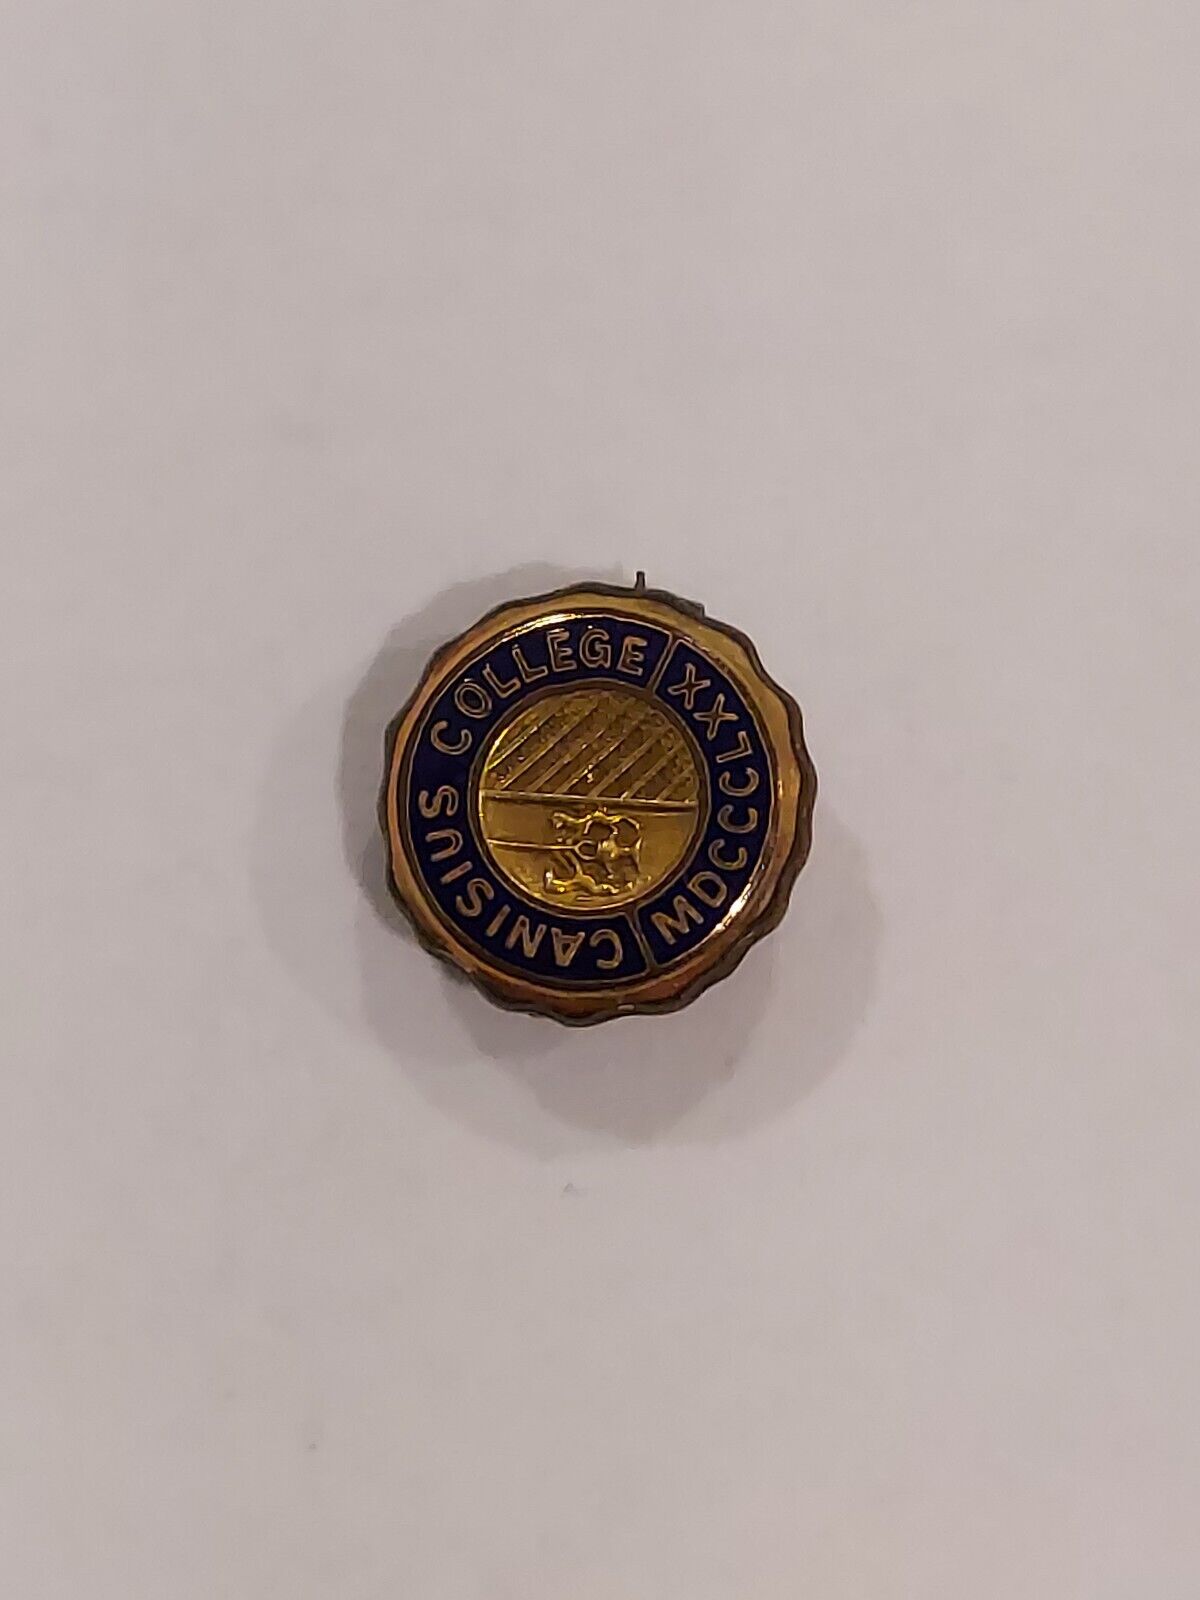 Cansius College MDCCCLXX (1870) pin